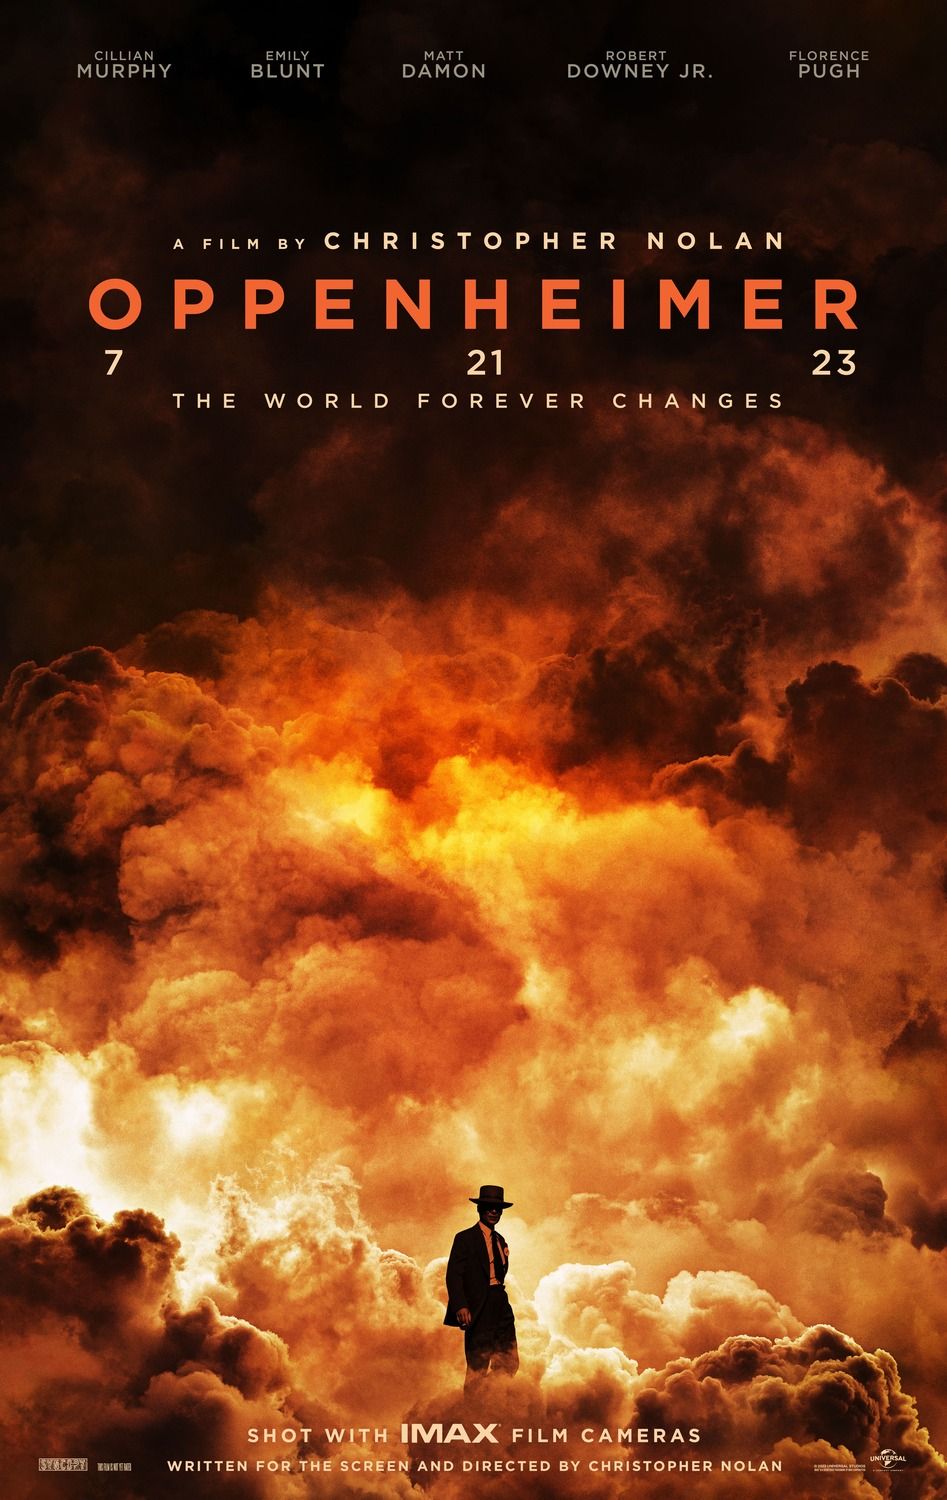 Oppenheimer 4K Blu-ray is back in stock now - Dexerto